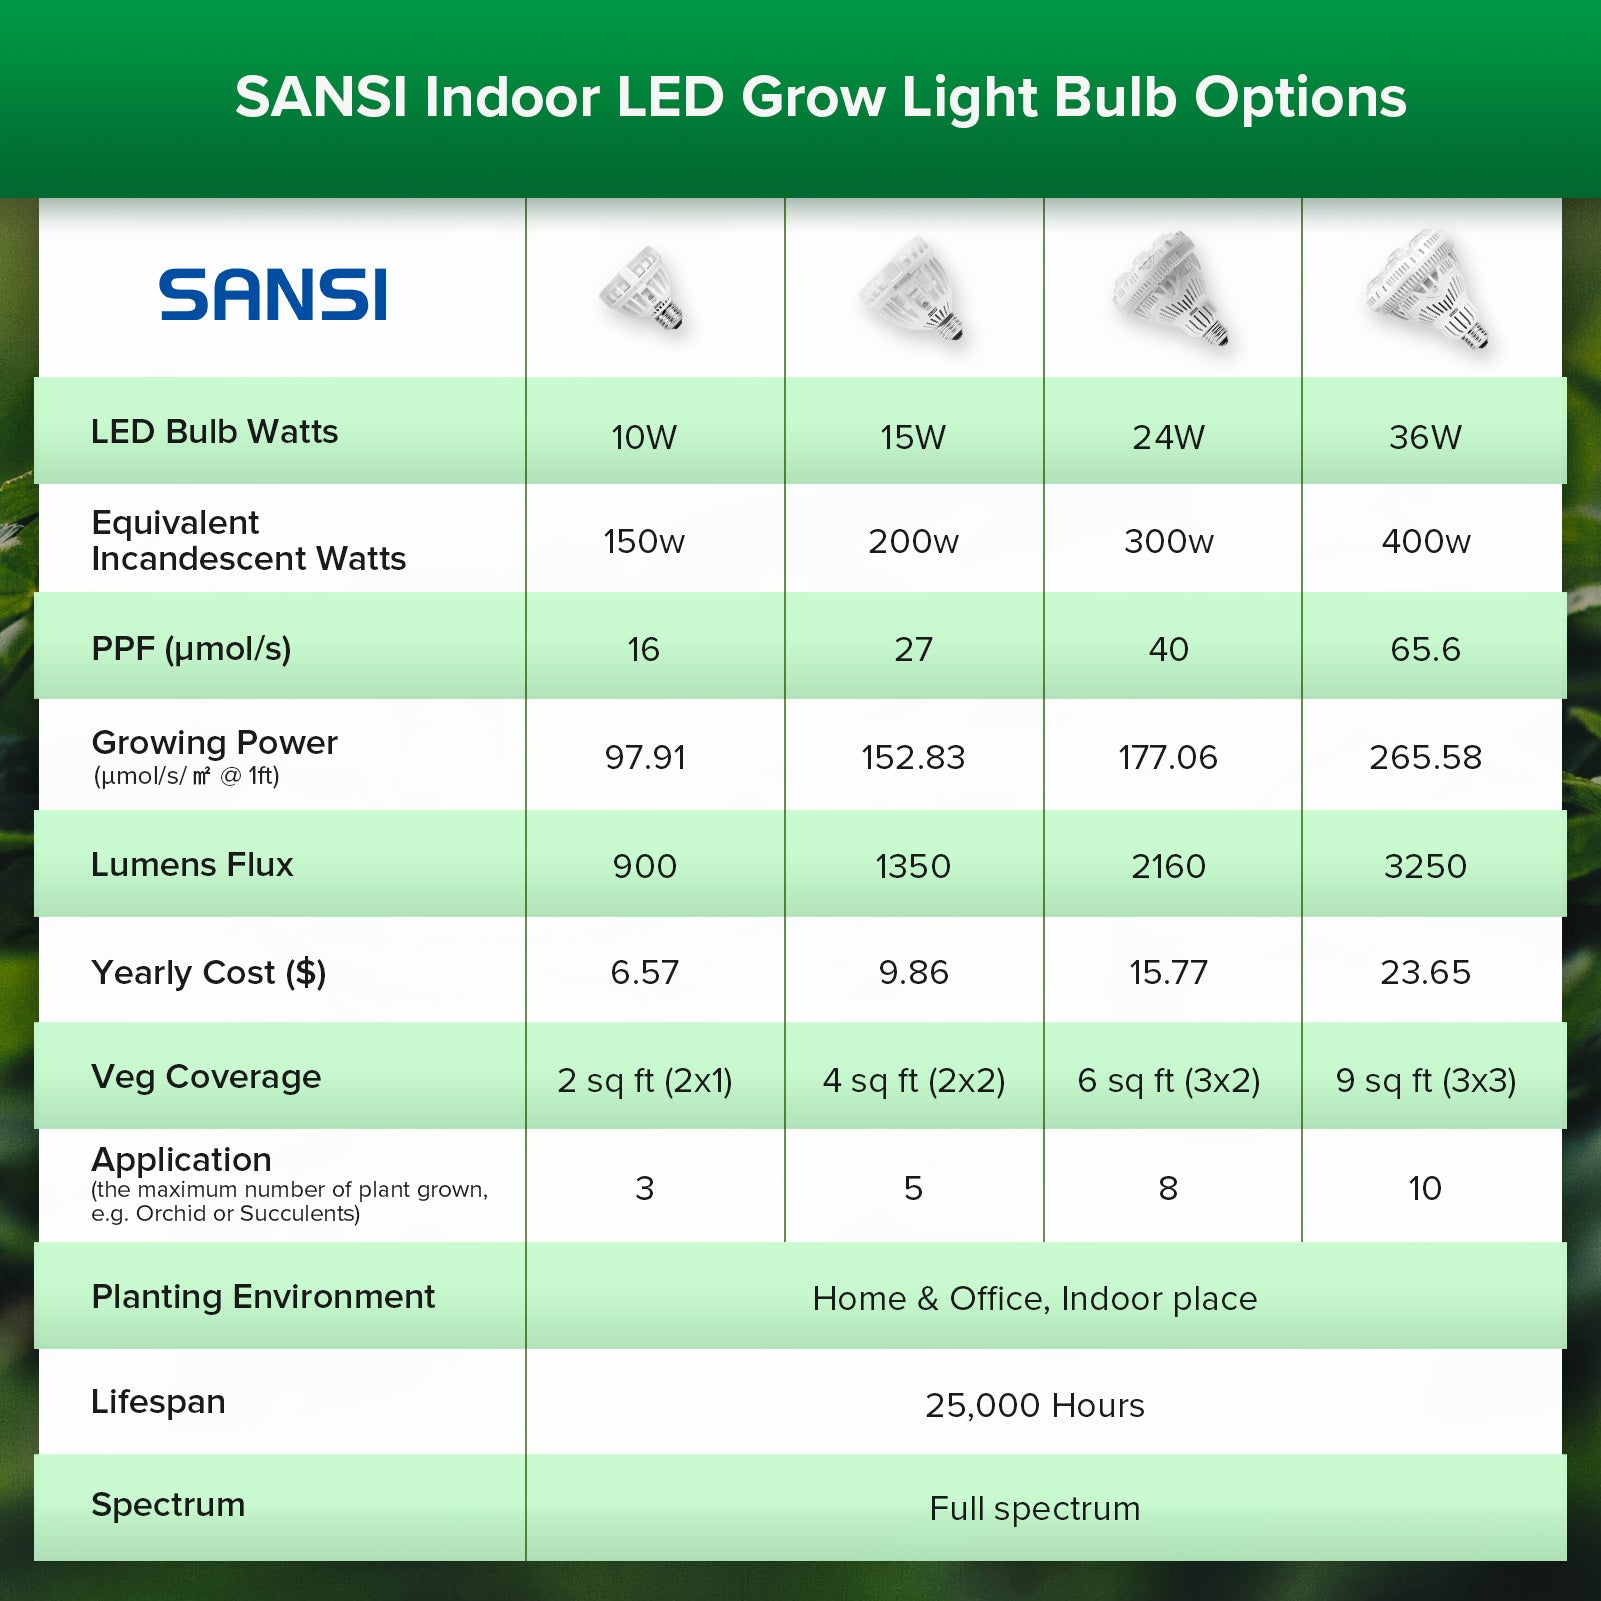 24W led grow light bulb with white light, suitable for high light and medium light indoor plants, SANSI indoor grow bulb option